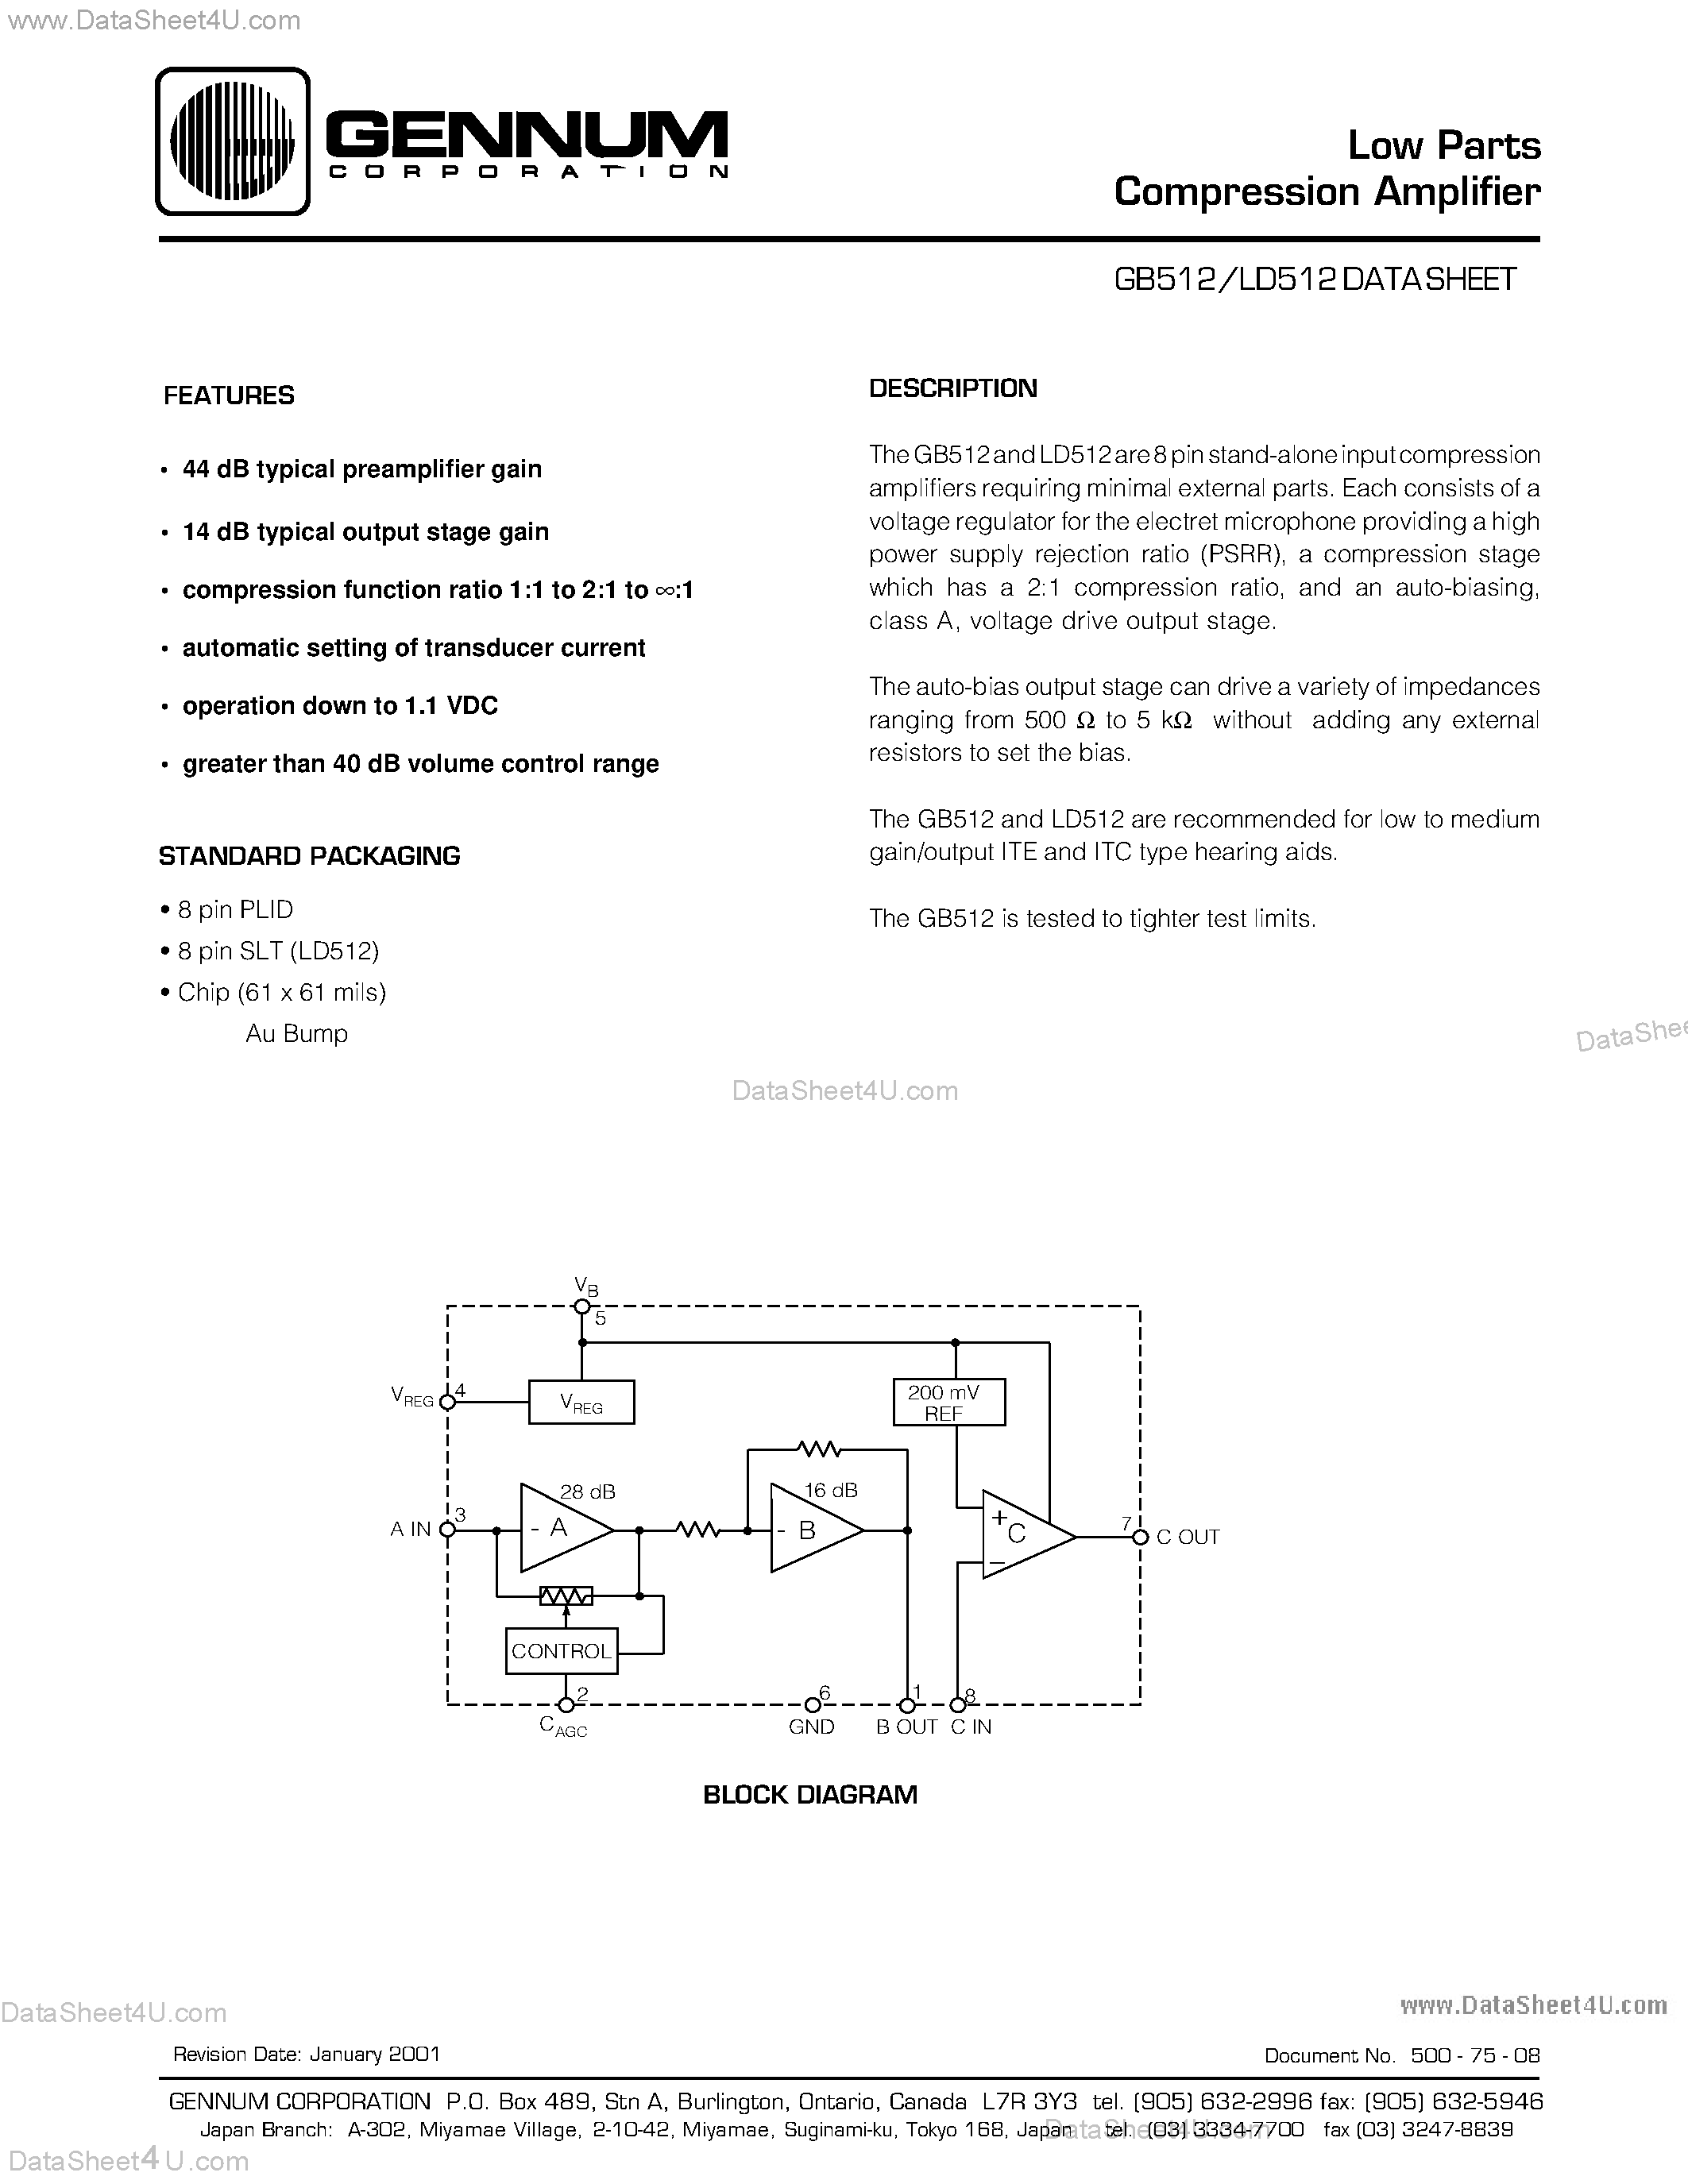 Даташит LD512 - Low Parts Compression Amplifier страница 1